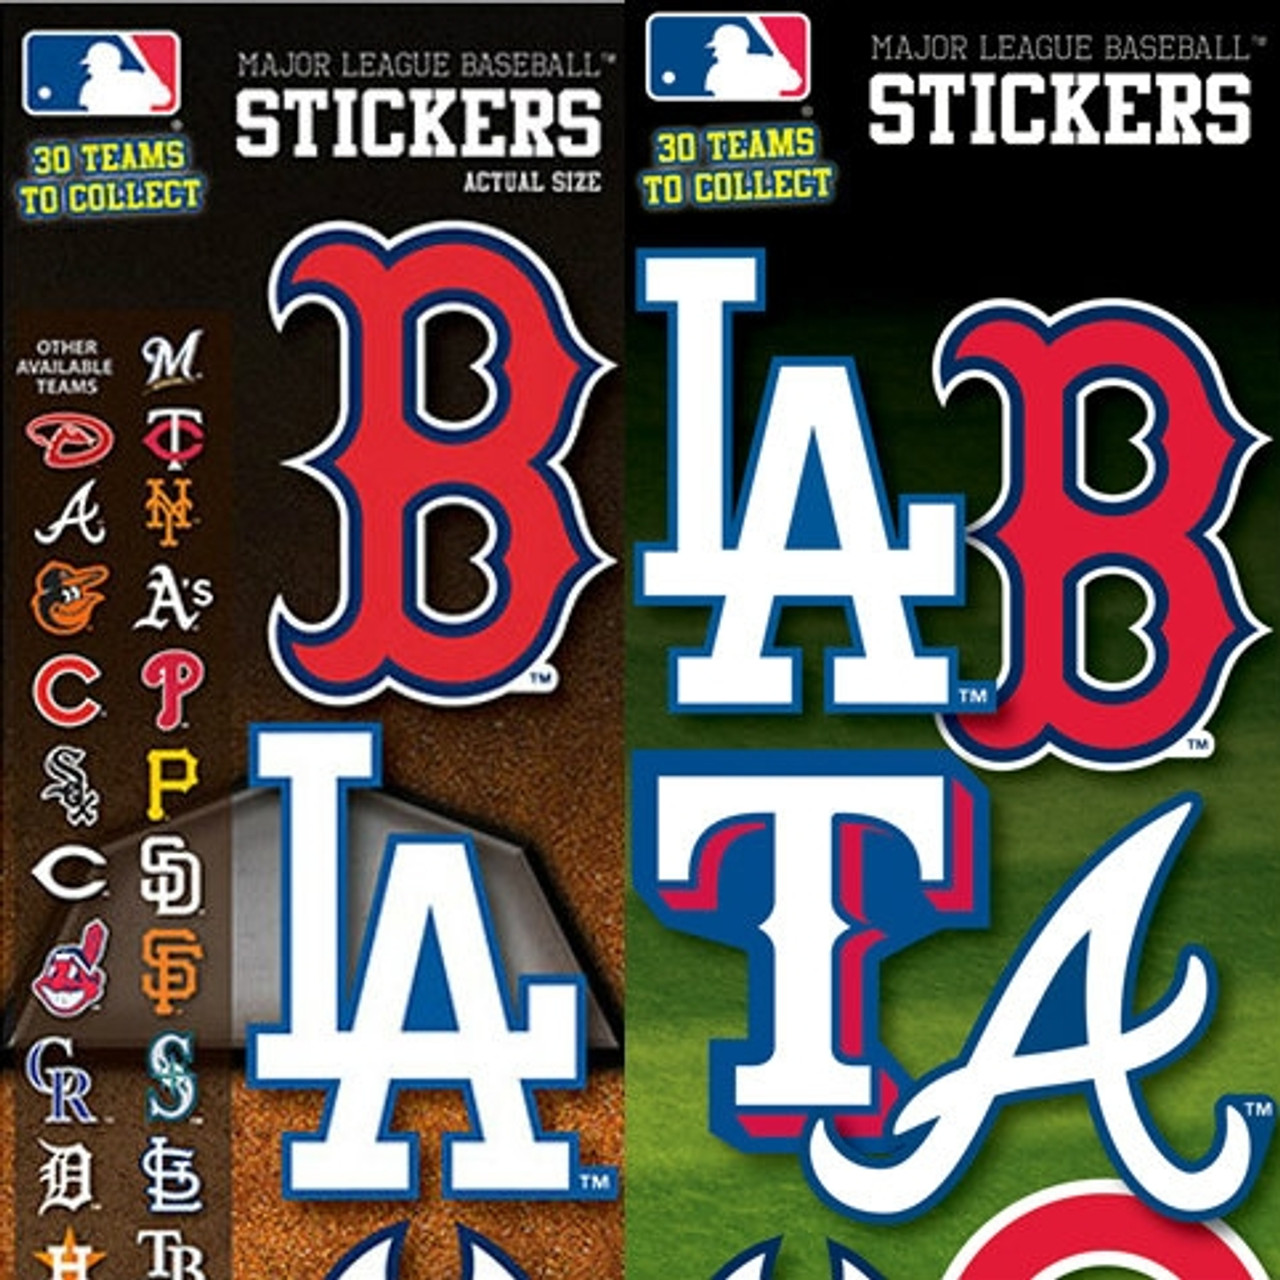 MLB Logos The Major League Baseball Team Logos And Names